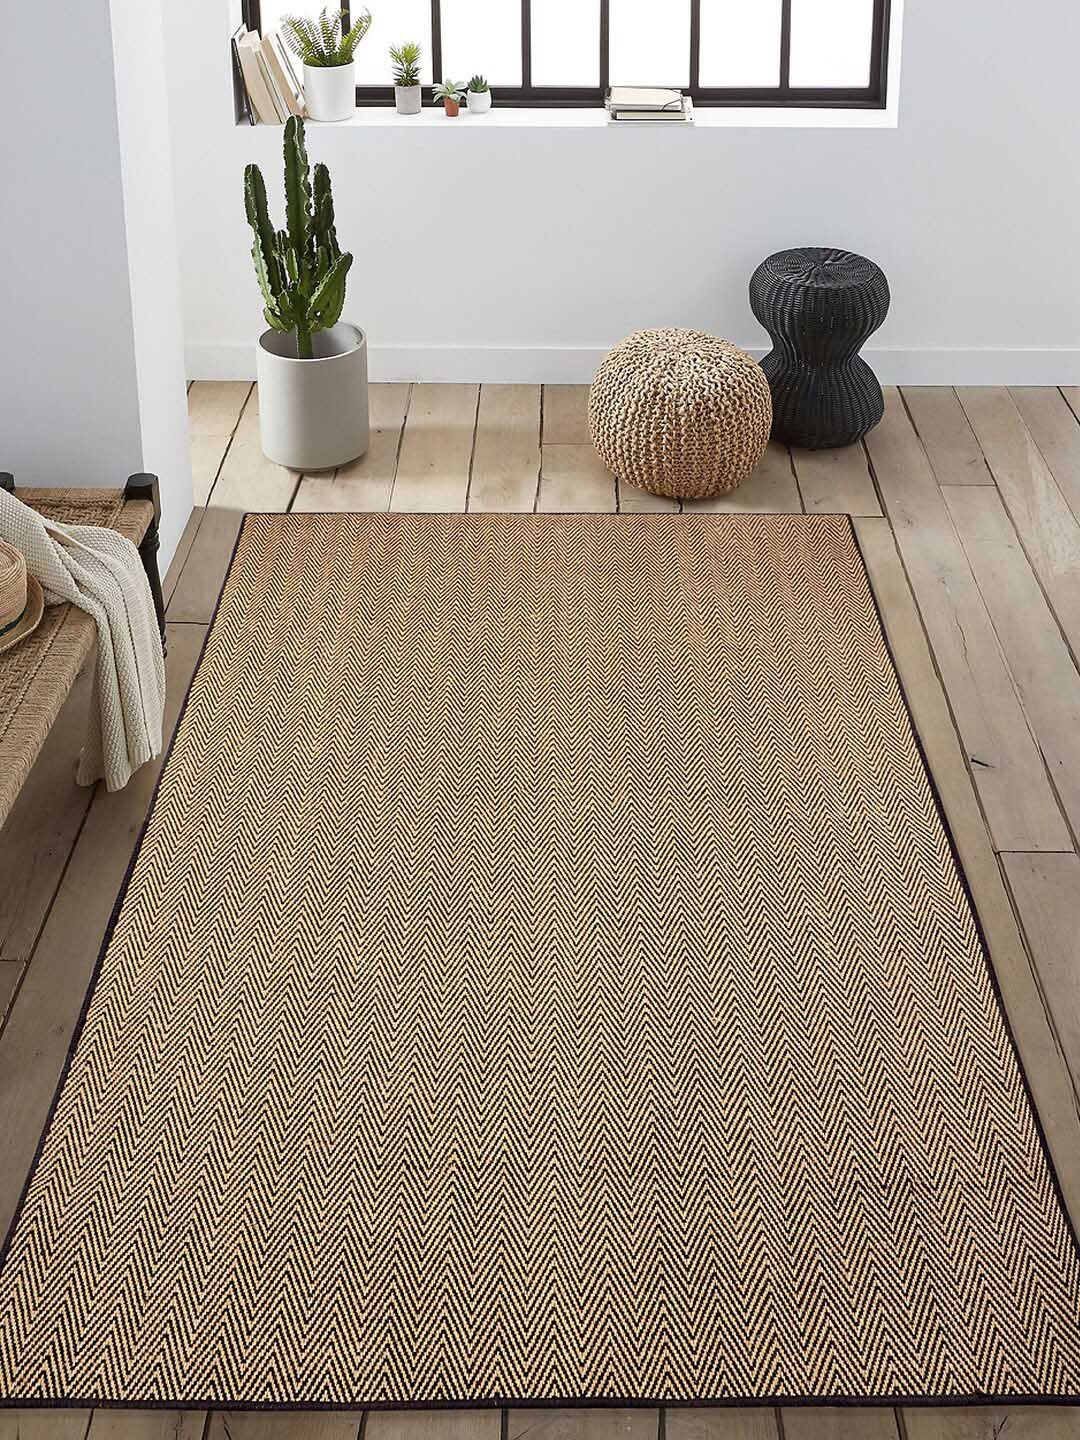 Saral Home Black & Tan-Brown Striped Modern Carpet Price in India